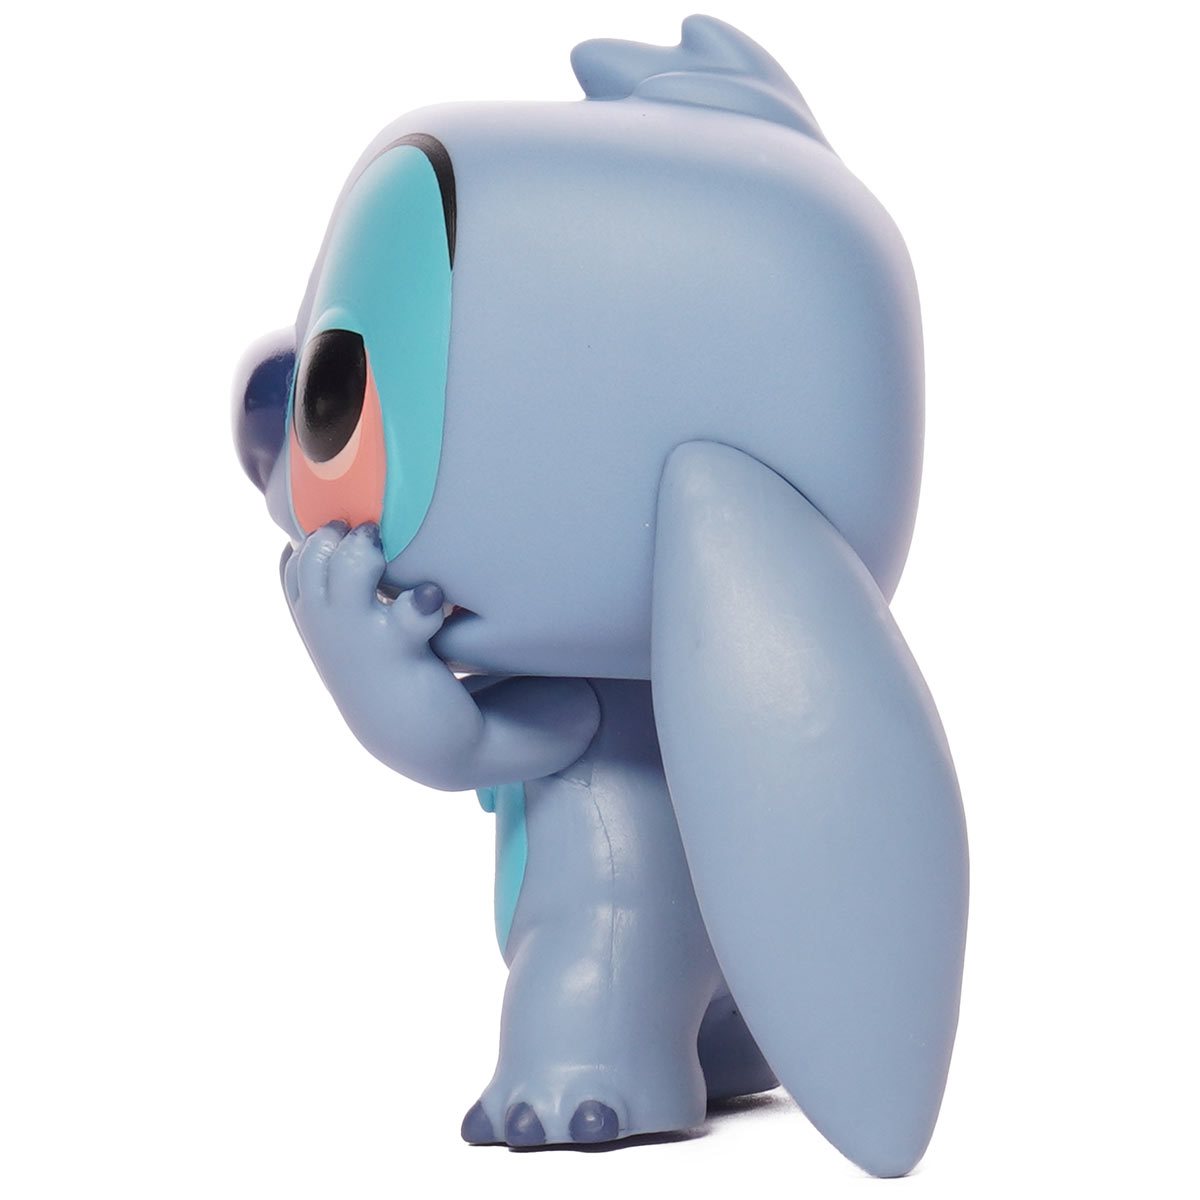 Funko POP Disney Lilo And Stitch - Annoyed Stitch Entertainment Earth  Exclusive (blue)